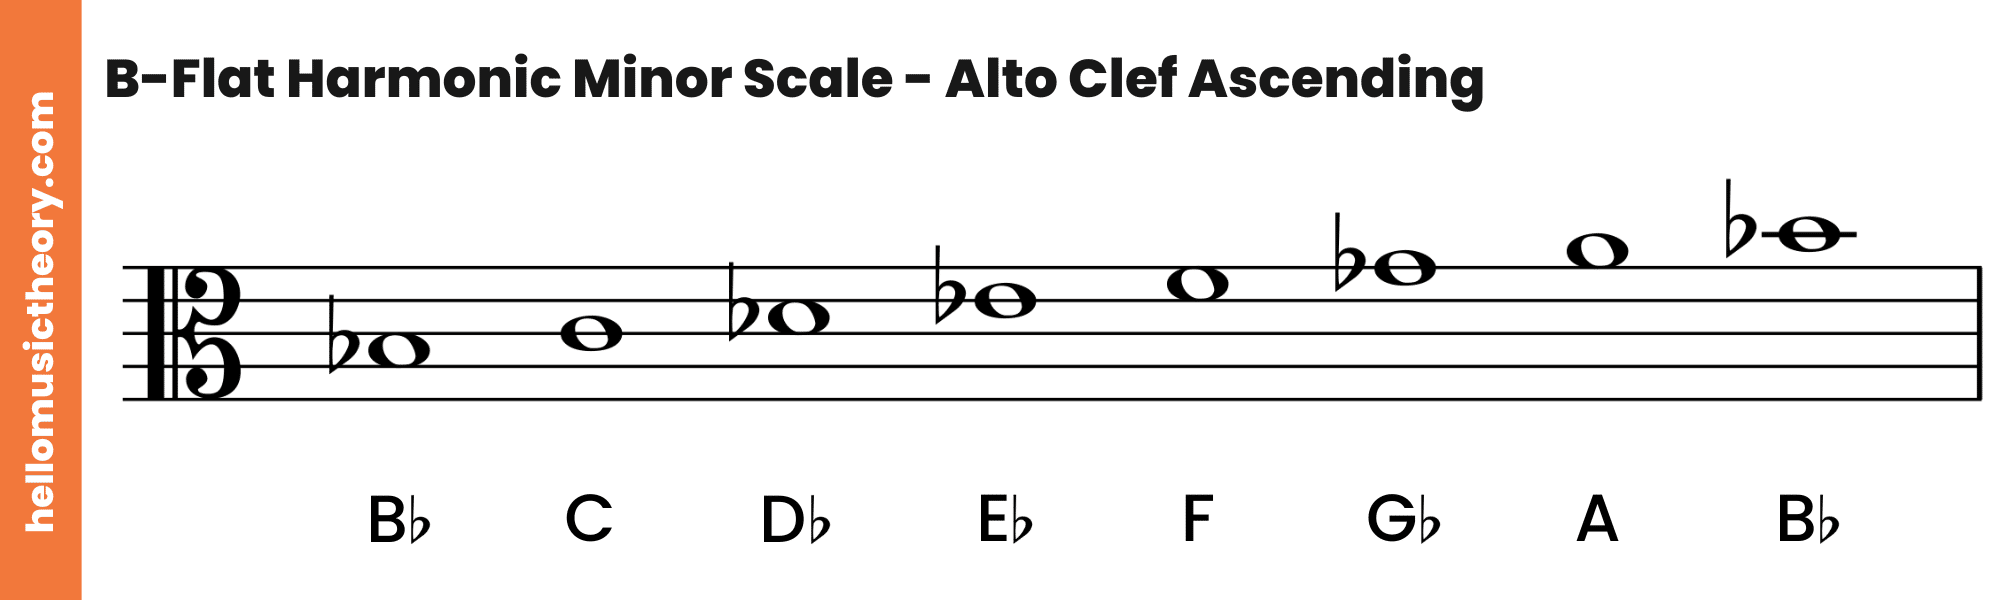 B-Flat Harmonic Minor Scale Alto Clef Ascending